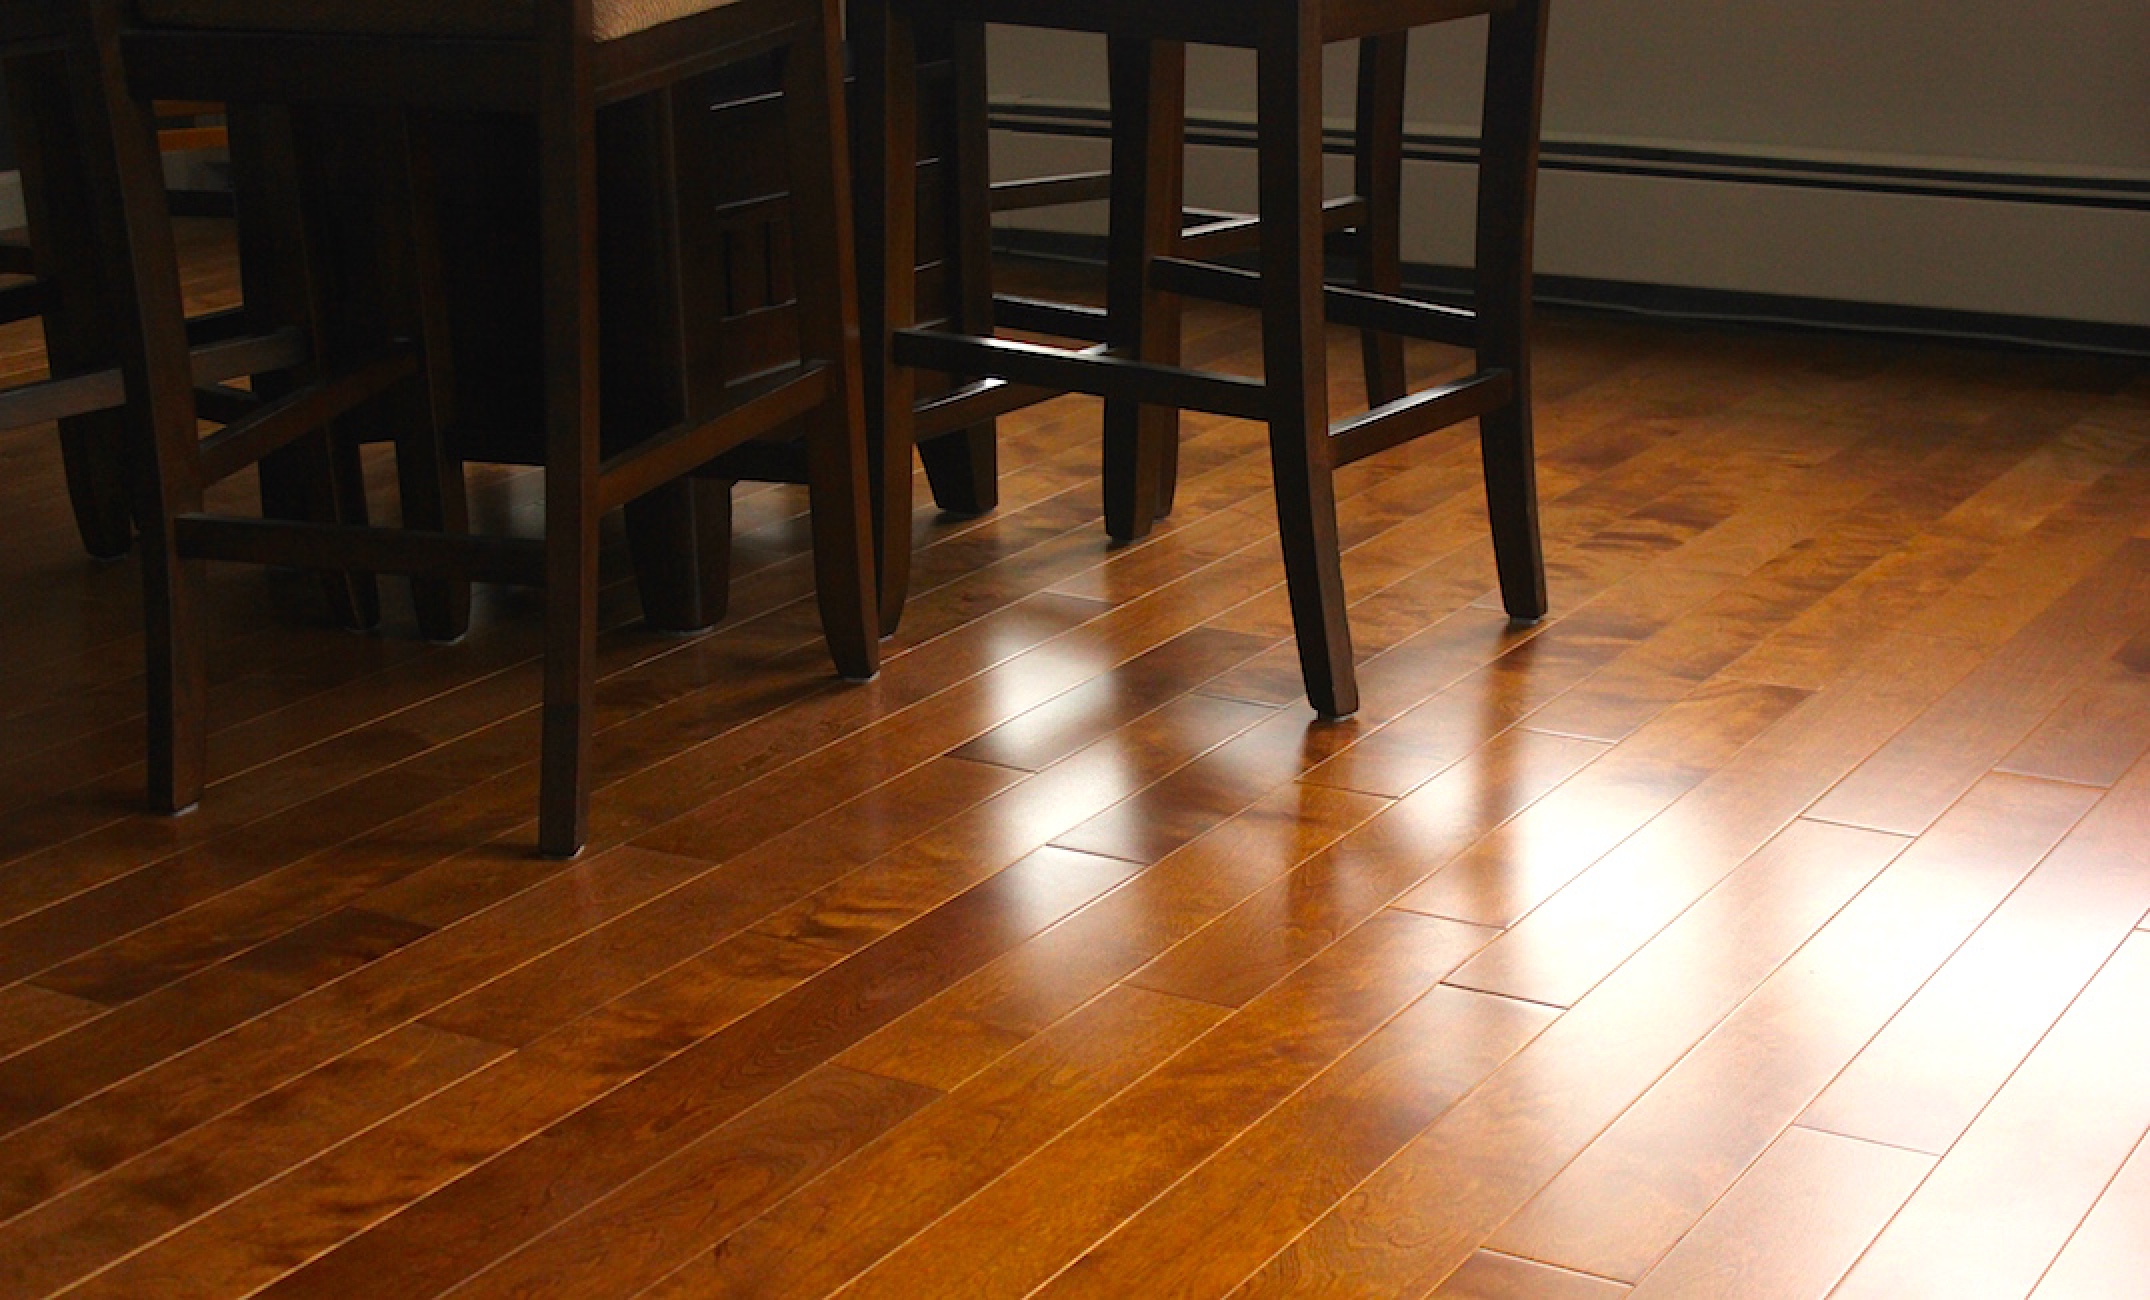 Hardwood floors in Dining room | BC FLOORS Portfolio